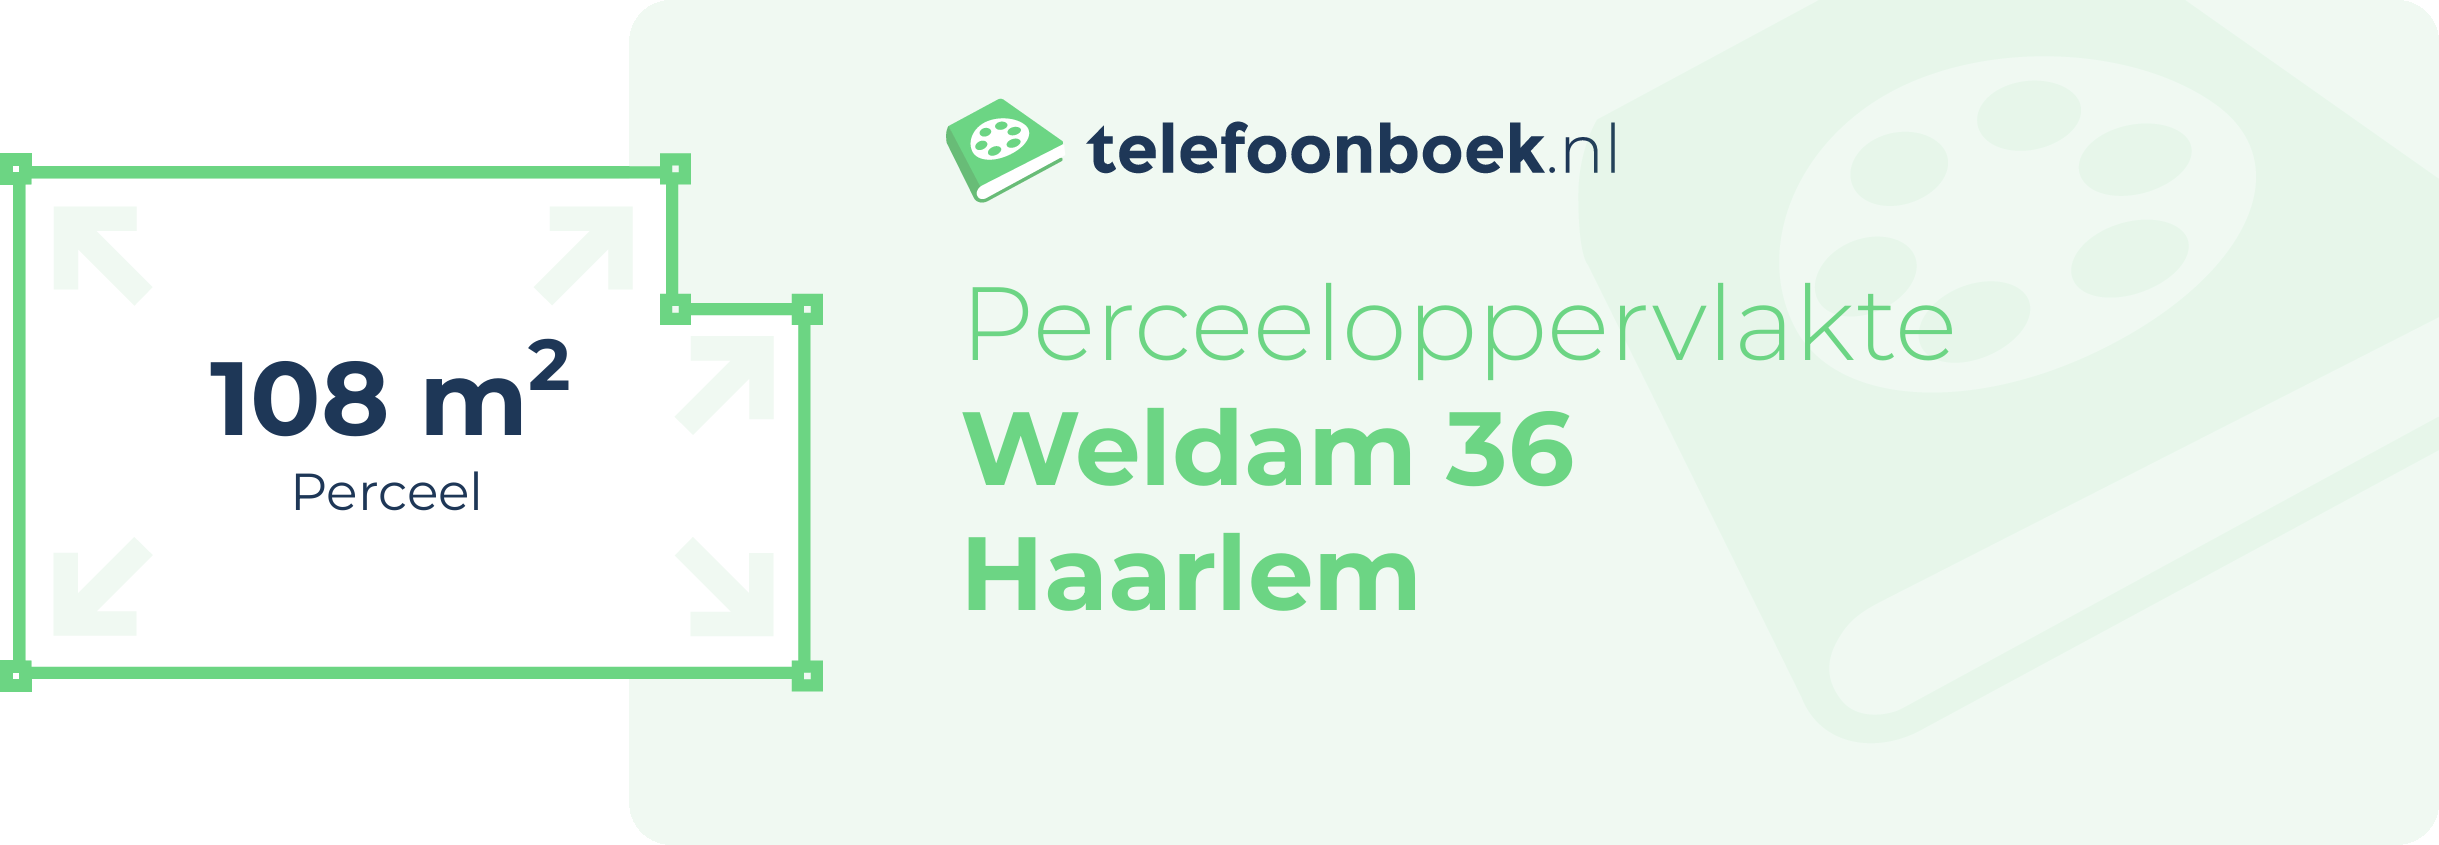 Perceeloppervlakte Weldam 36 Haarlem